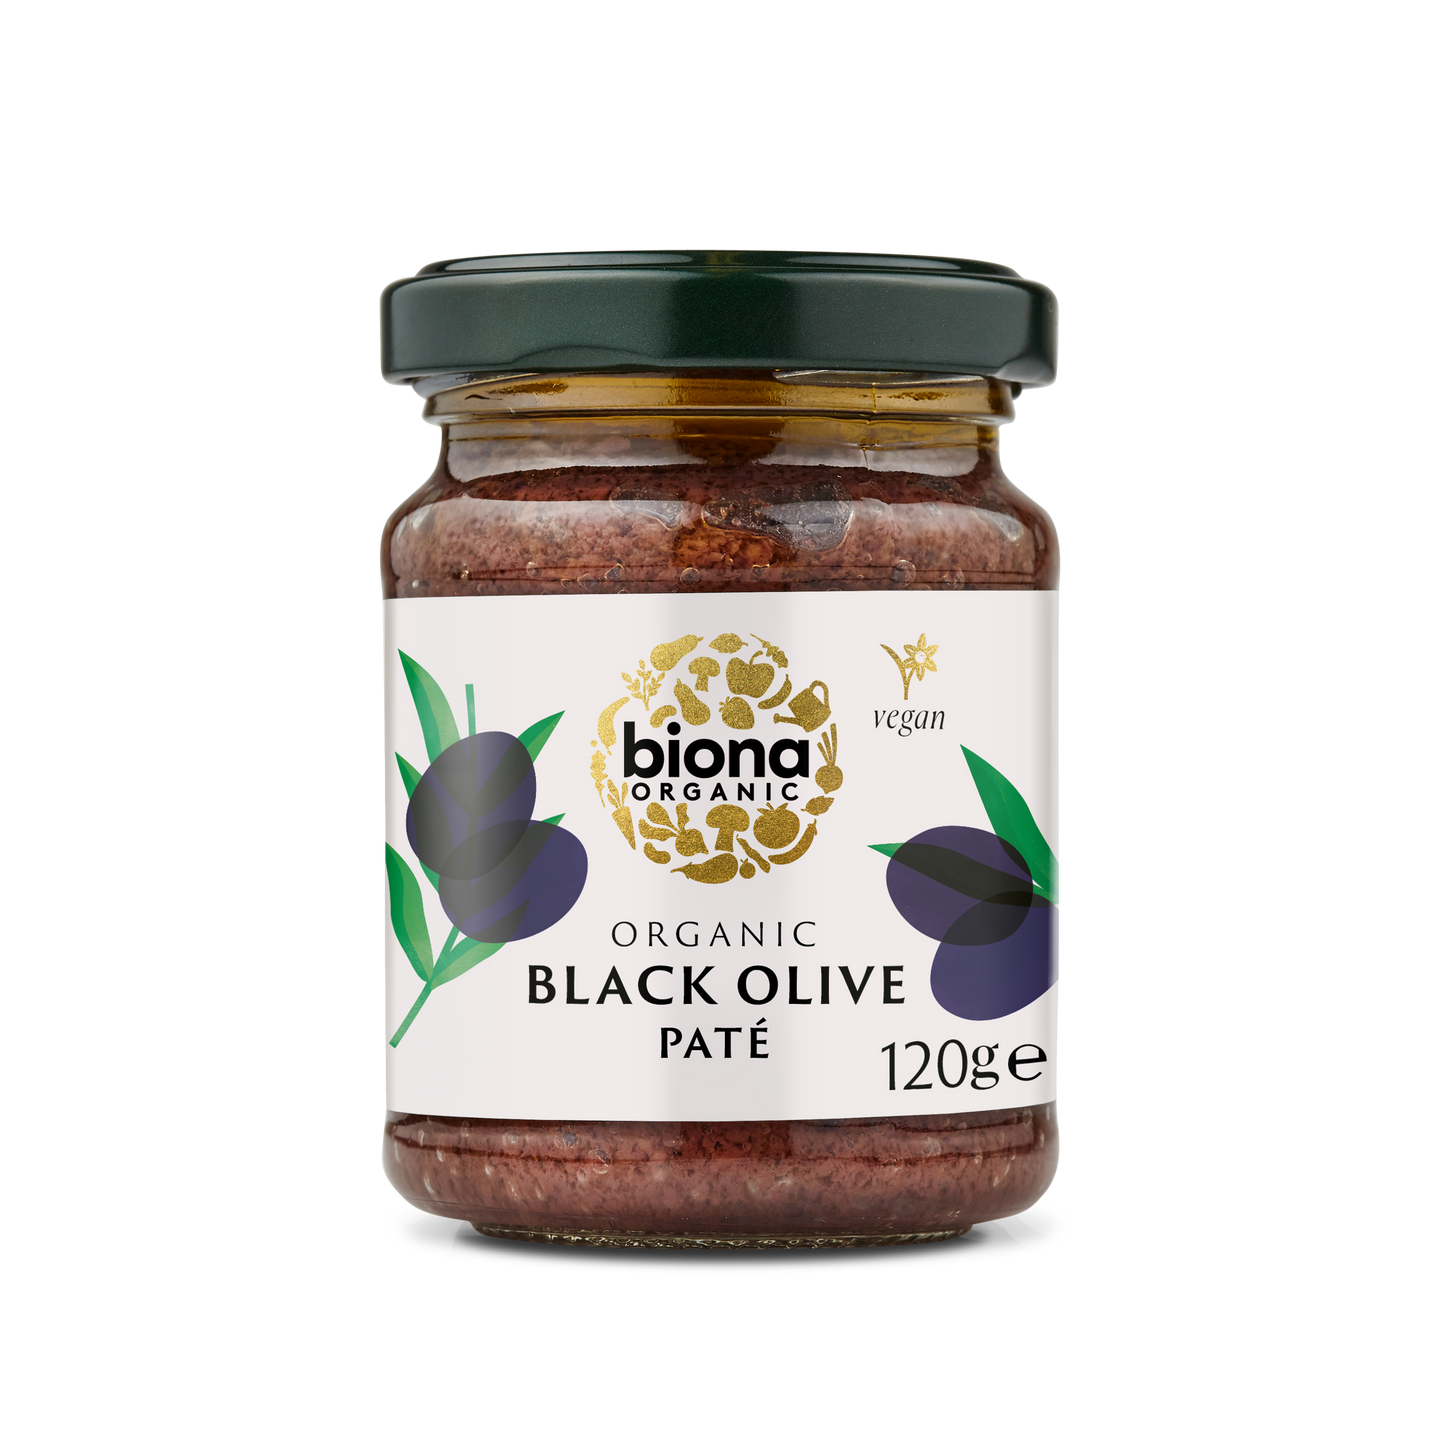 Biona Black Olive Pate - 120G